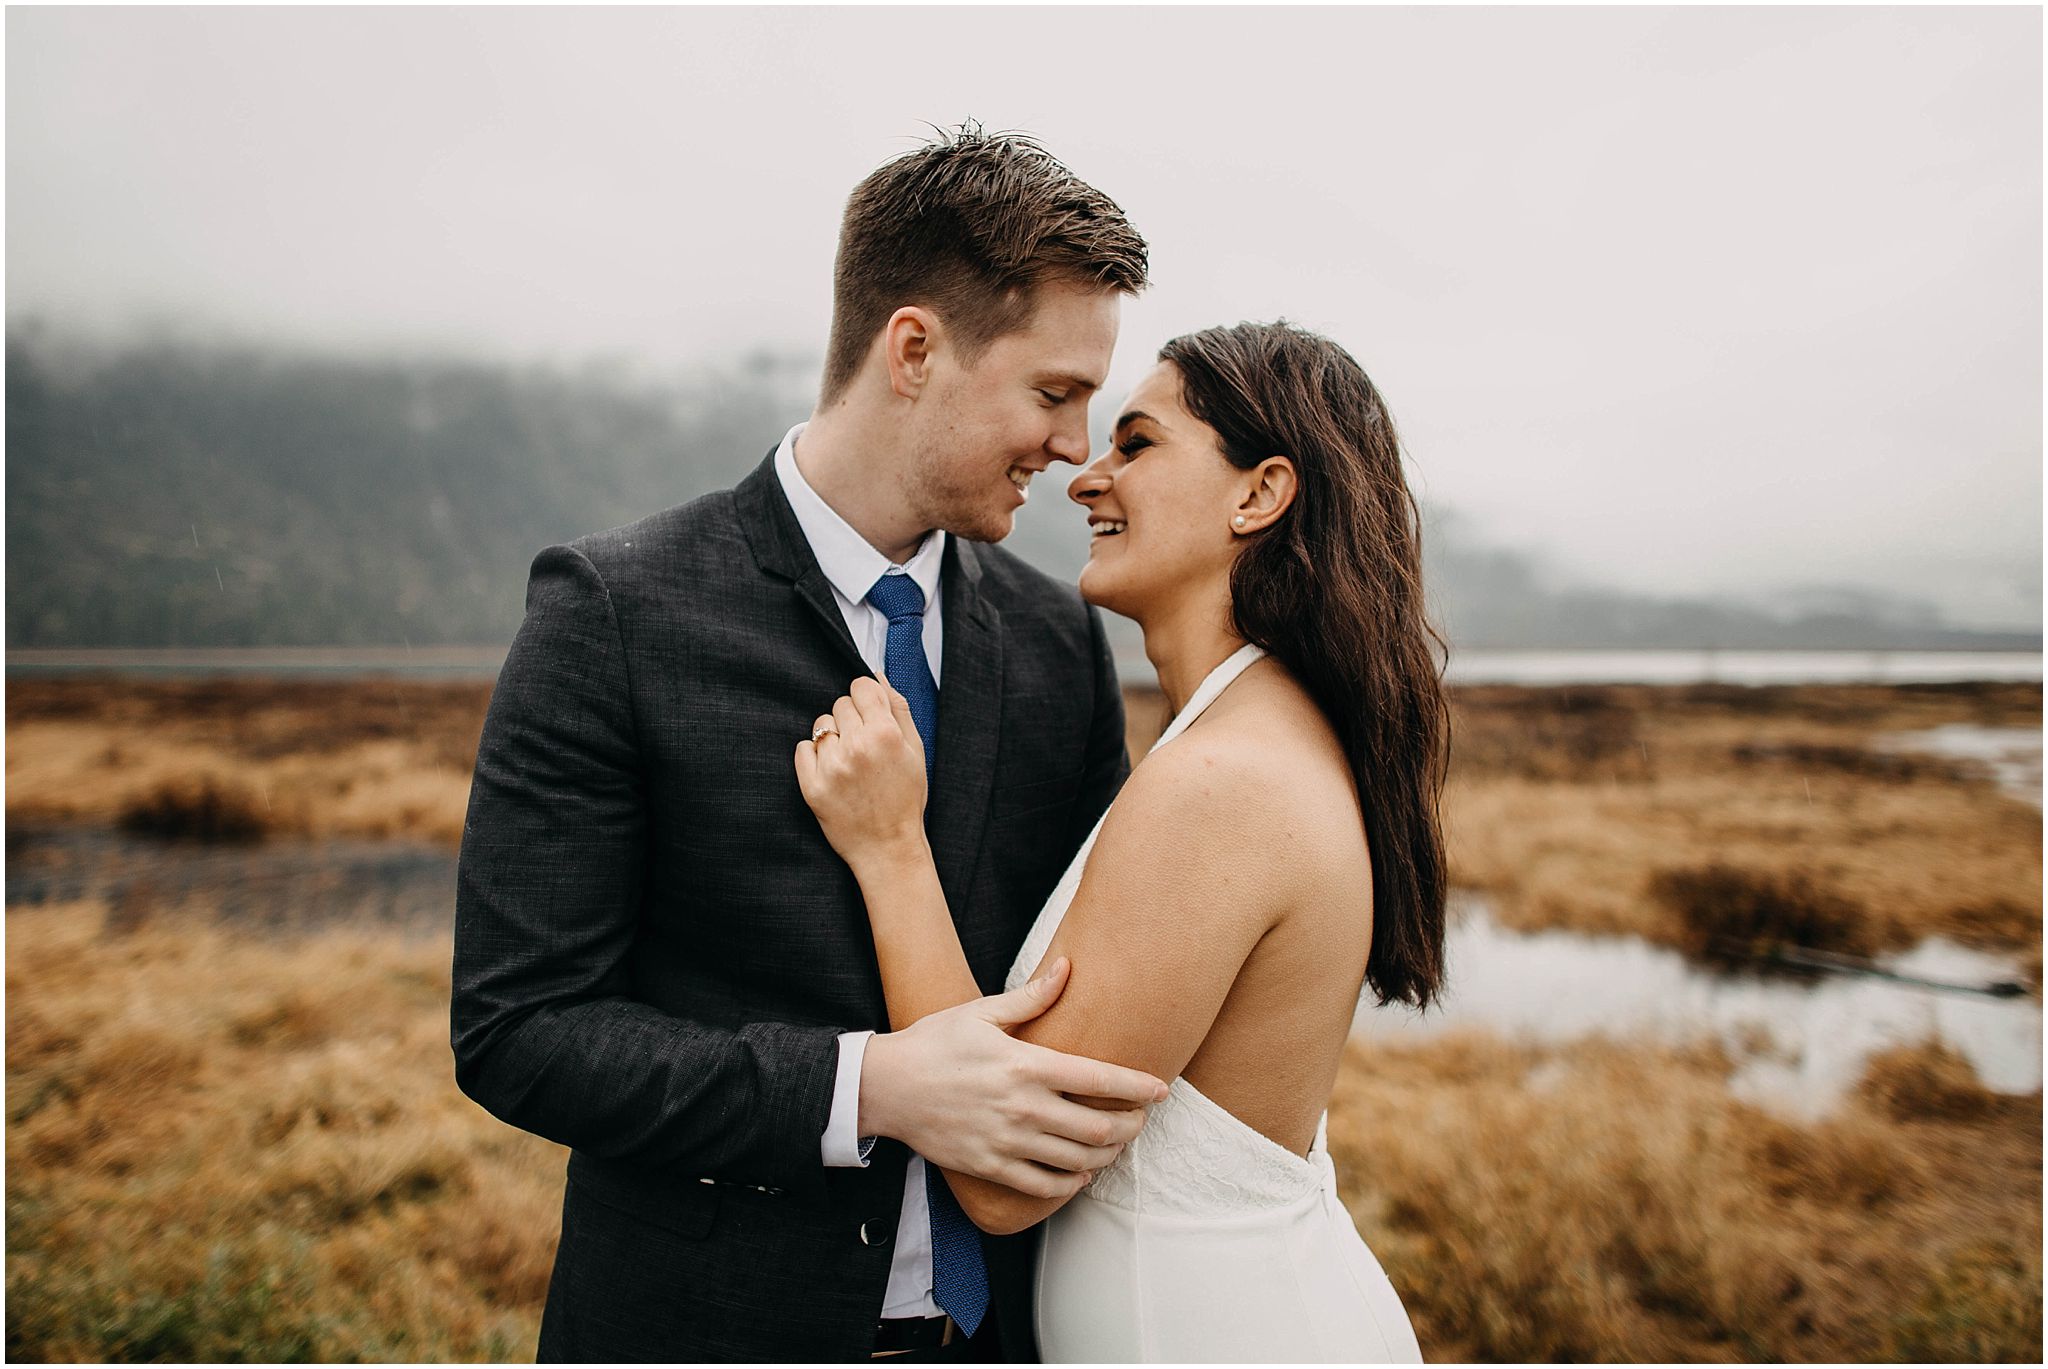 romantic moment between bride and groom pitt lake